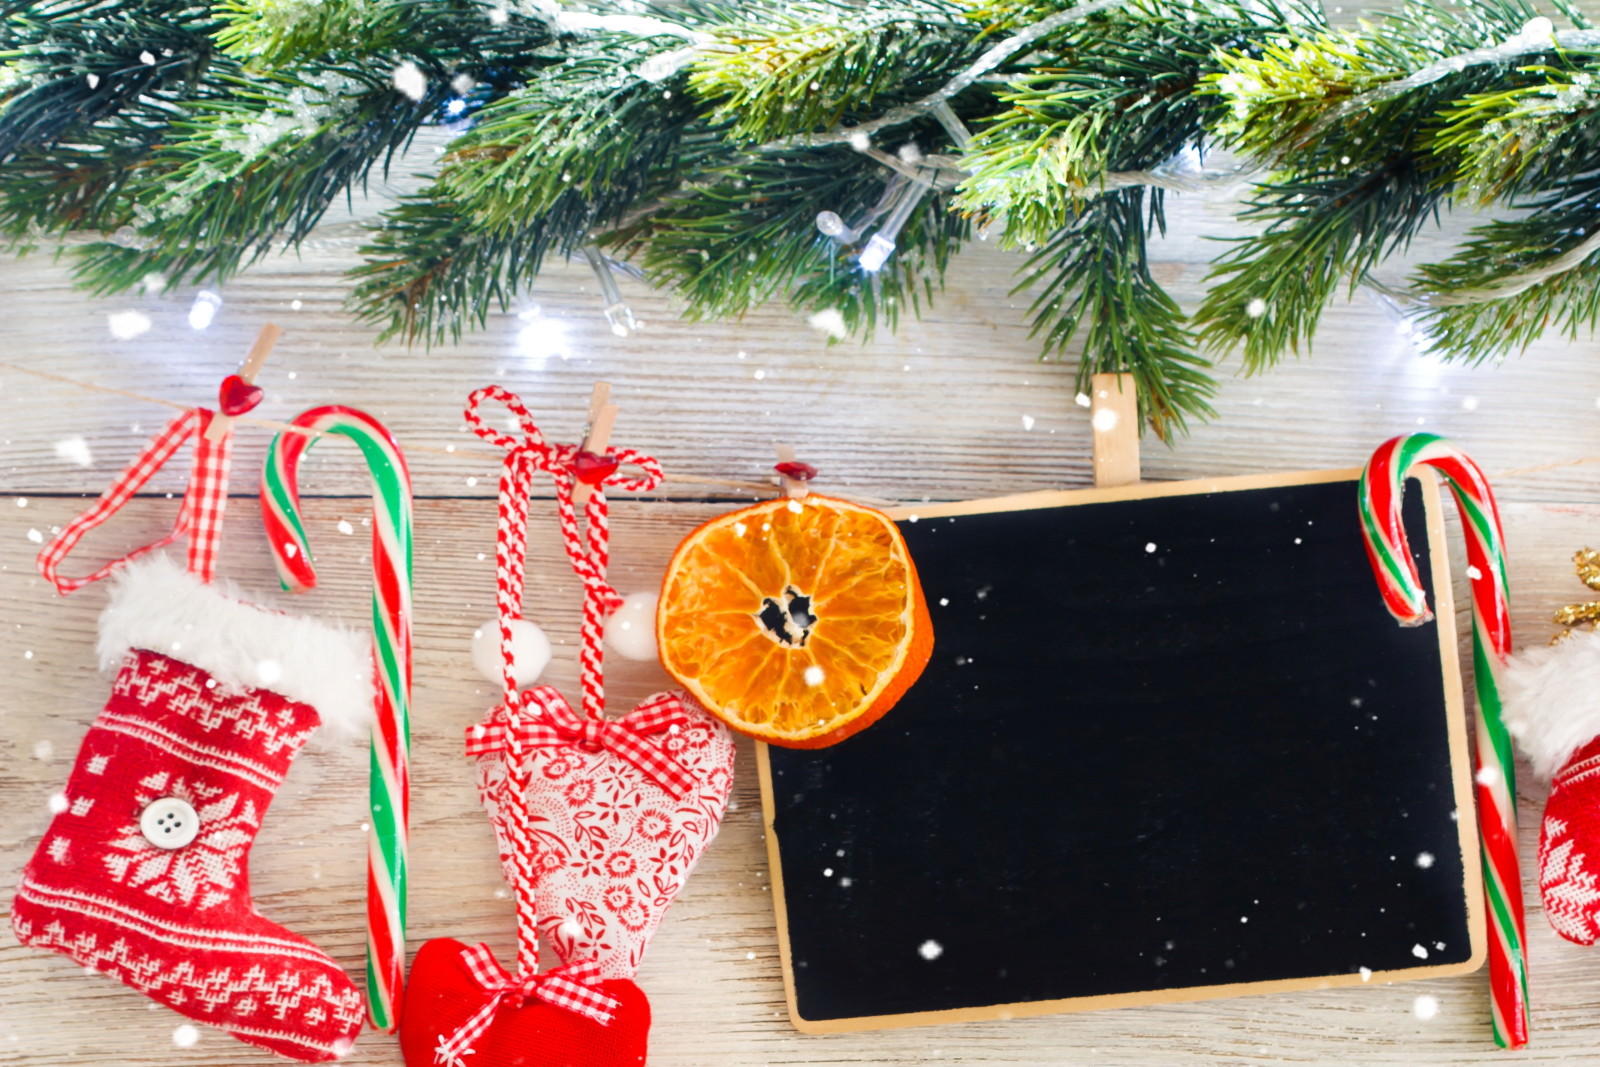 pohon, Tahun baru, hari Natal, dekorasi, Gembira, Xmas, mainan